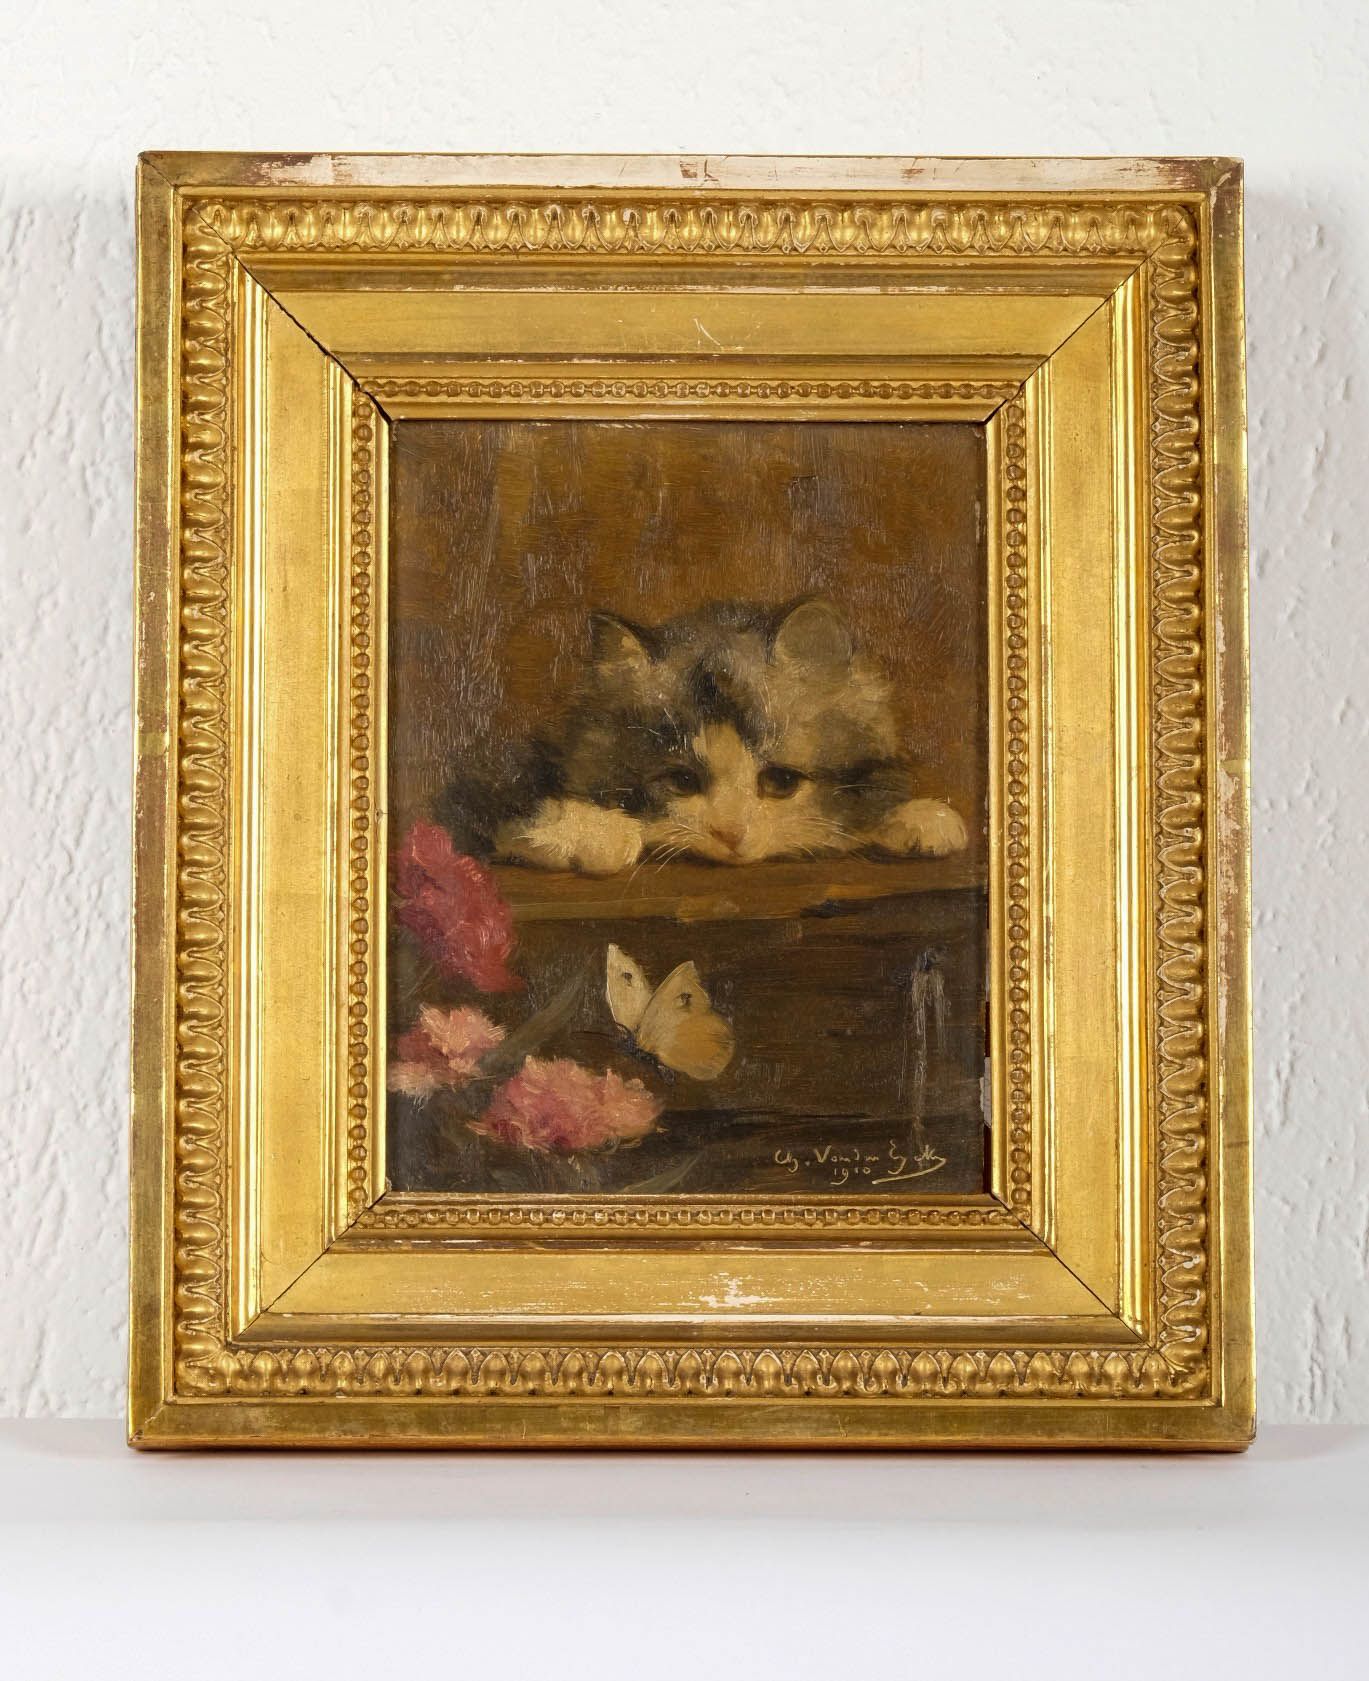 Charles II VAN DEN EYCKEN (1859-1923) 
小猫，面板油画，签名和日期为1910年，18 X 14厘米。